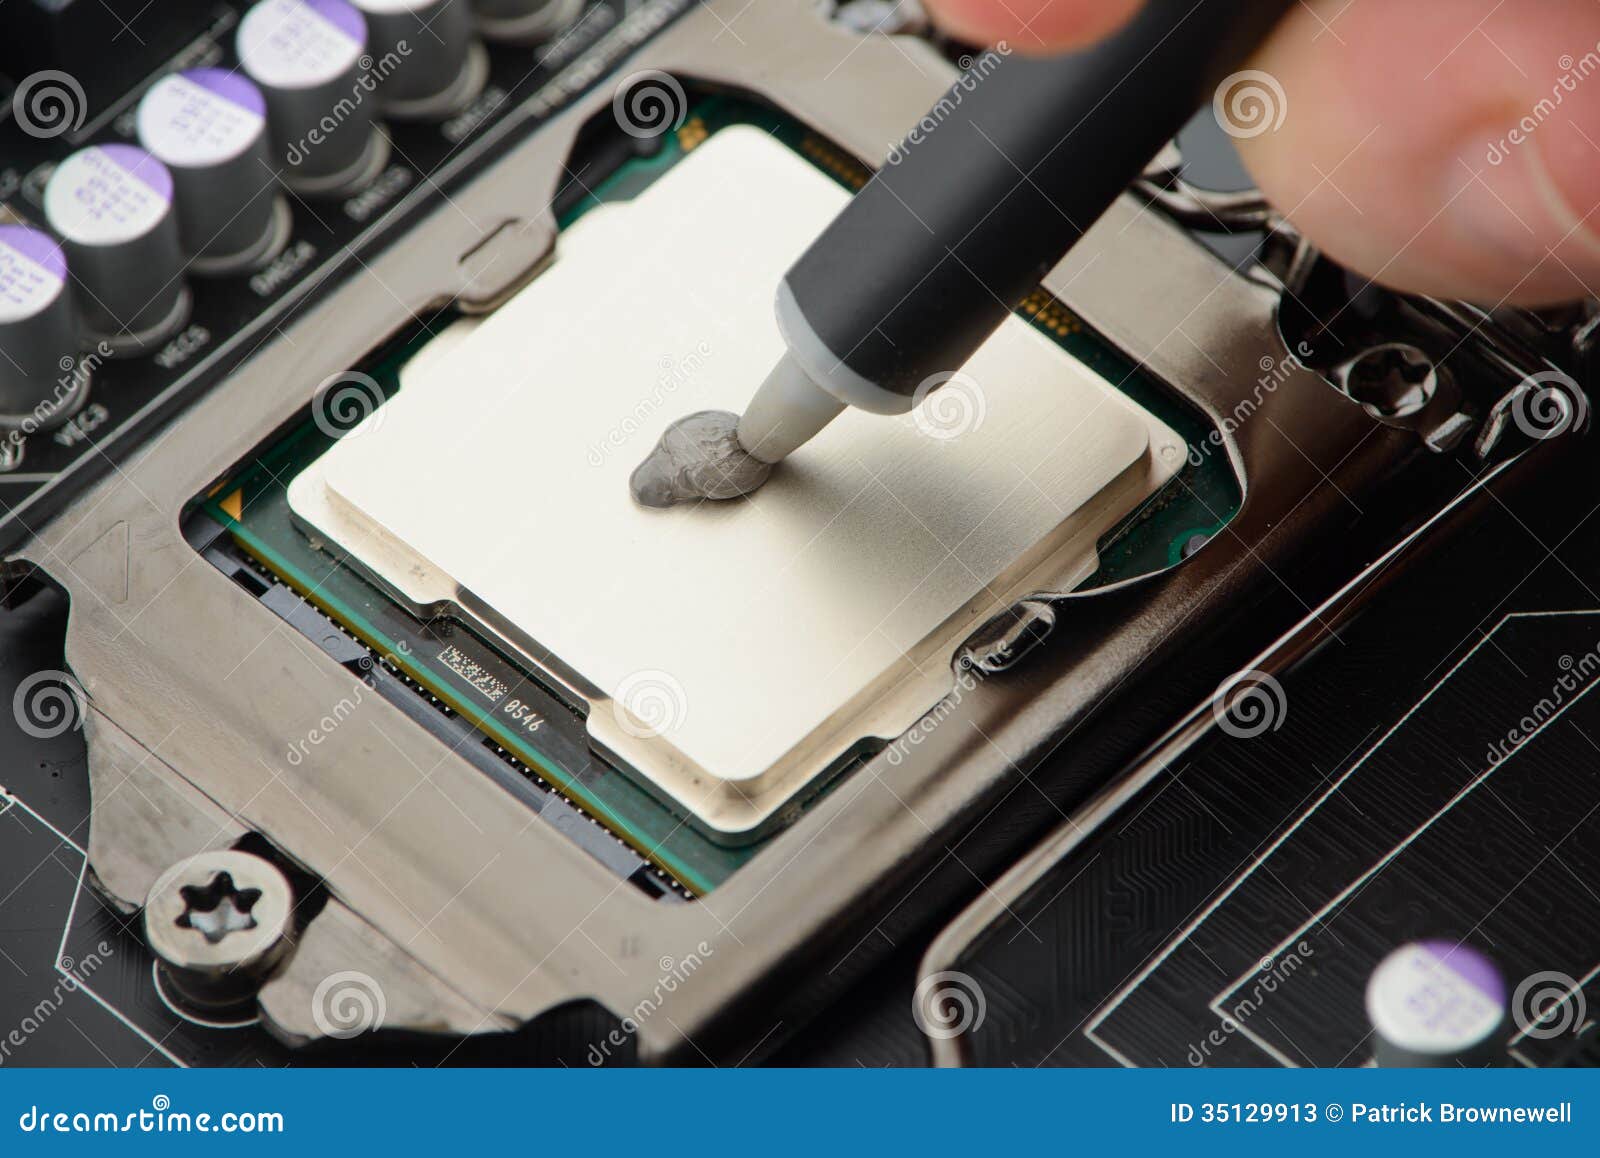 applying-thermal-paste-to-cpu-processor-motherboard-35129913.jpg